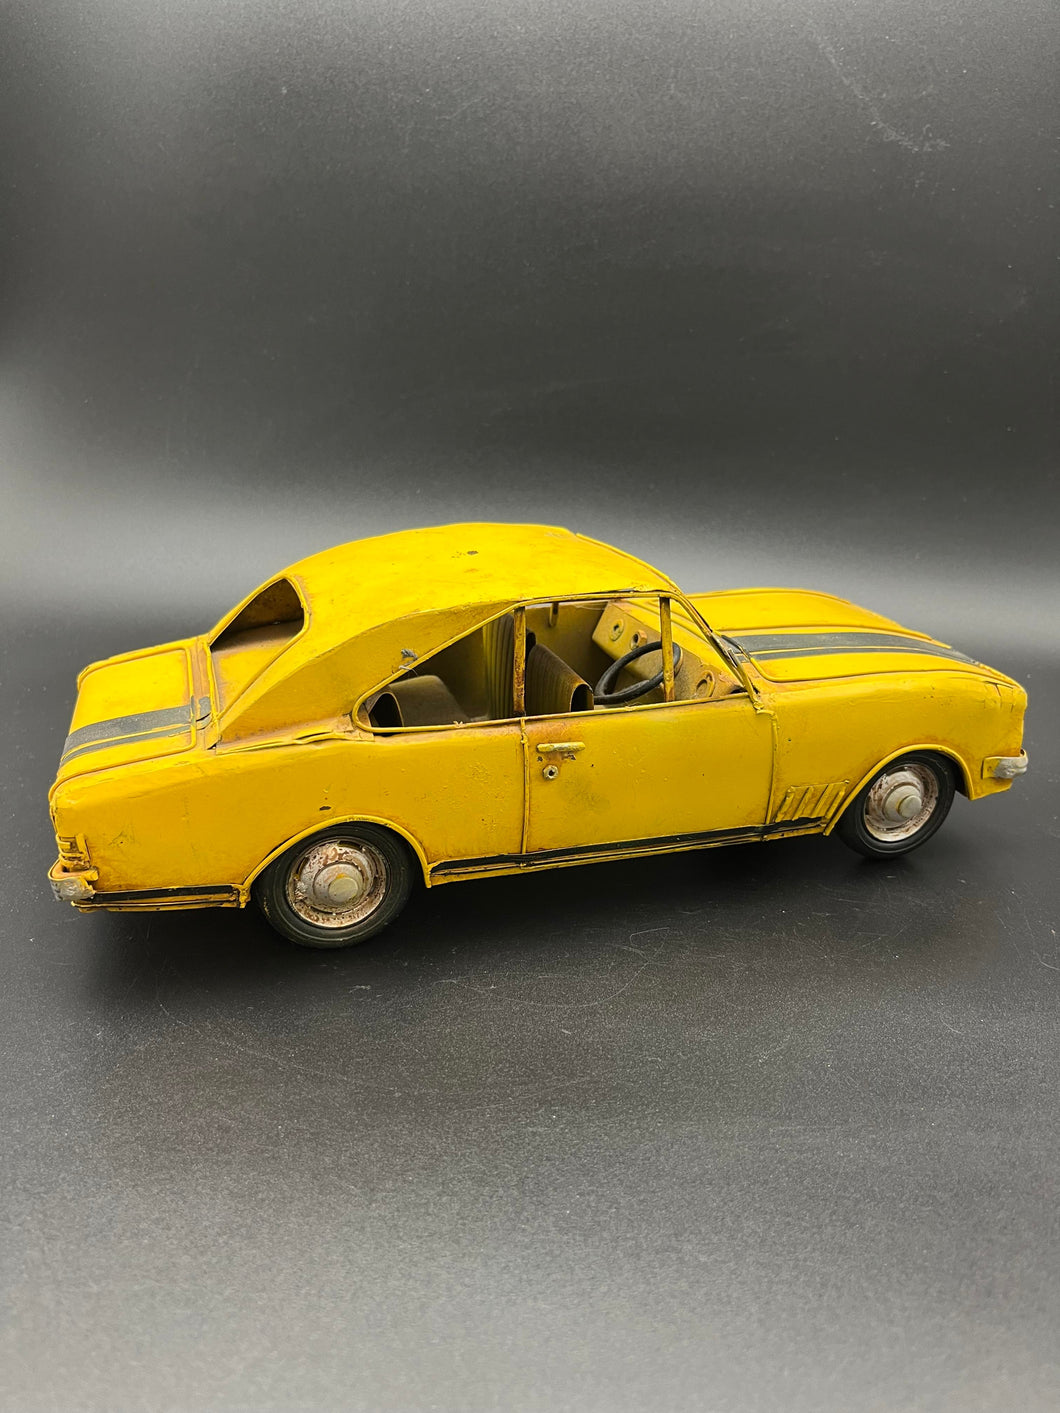 Holden Monaro Tin Model - Yellow